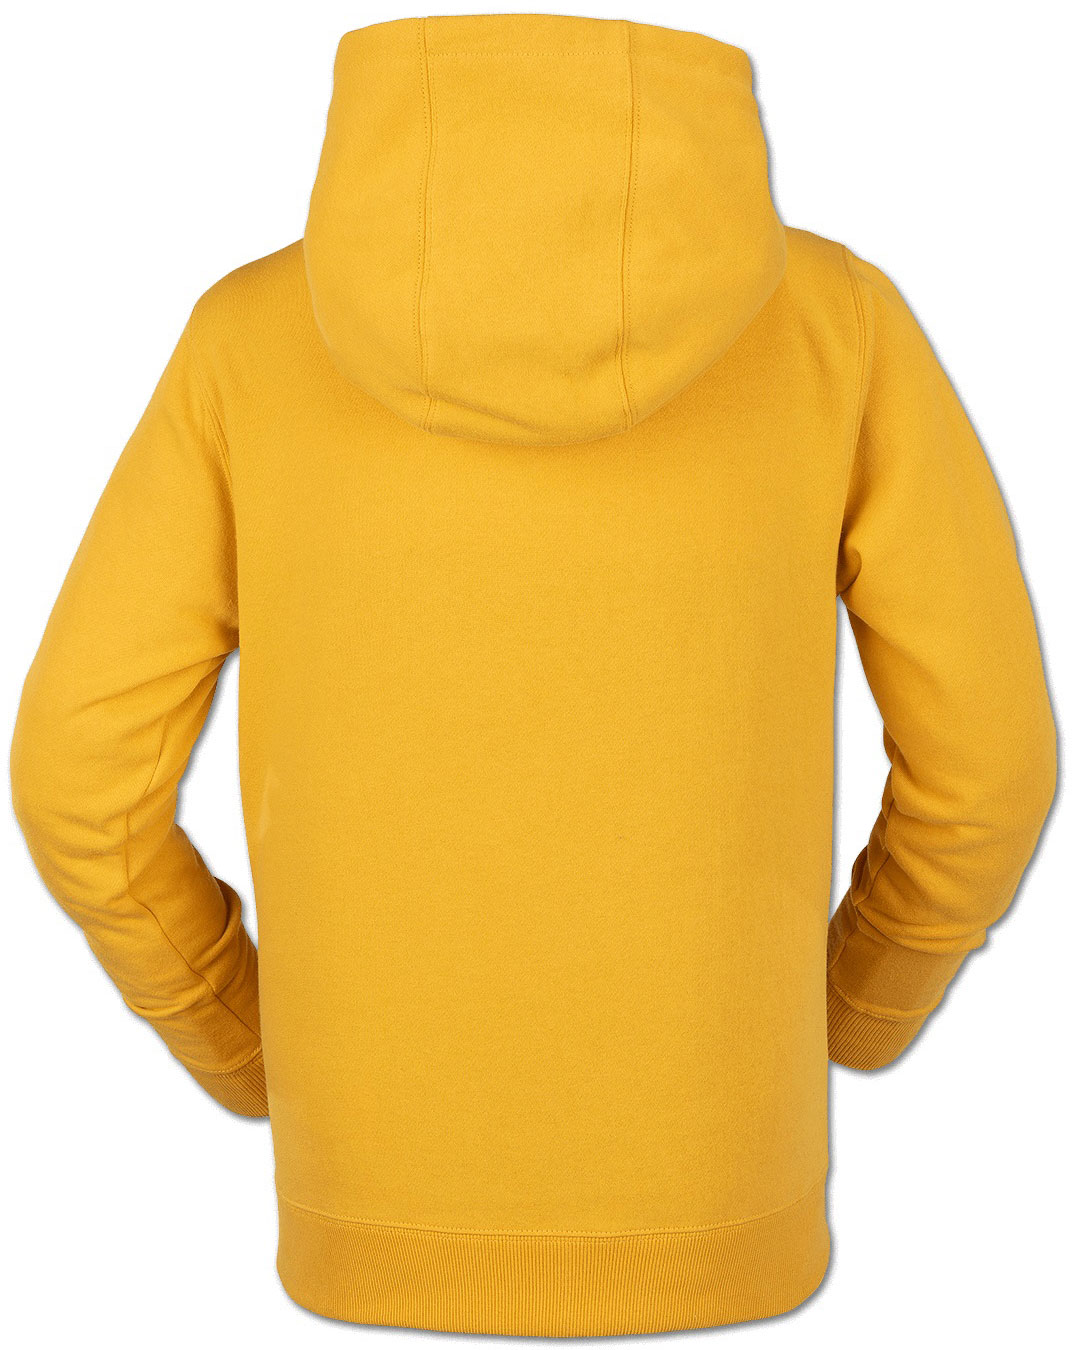 Children's hoodie